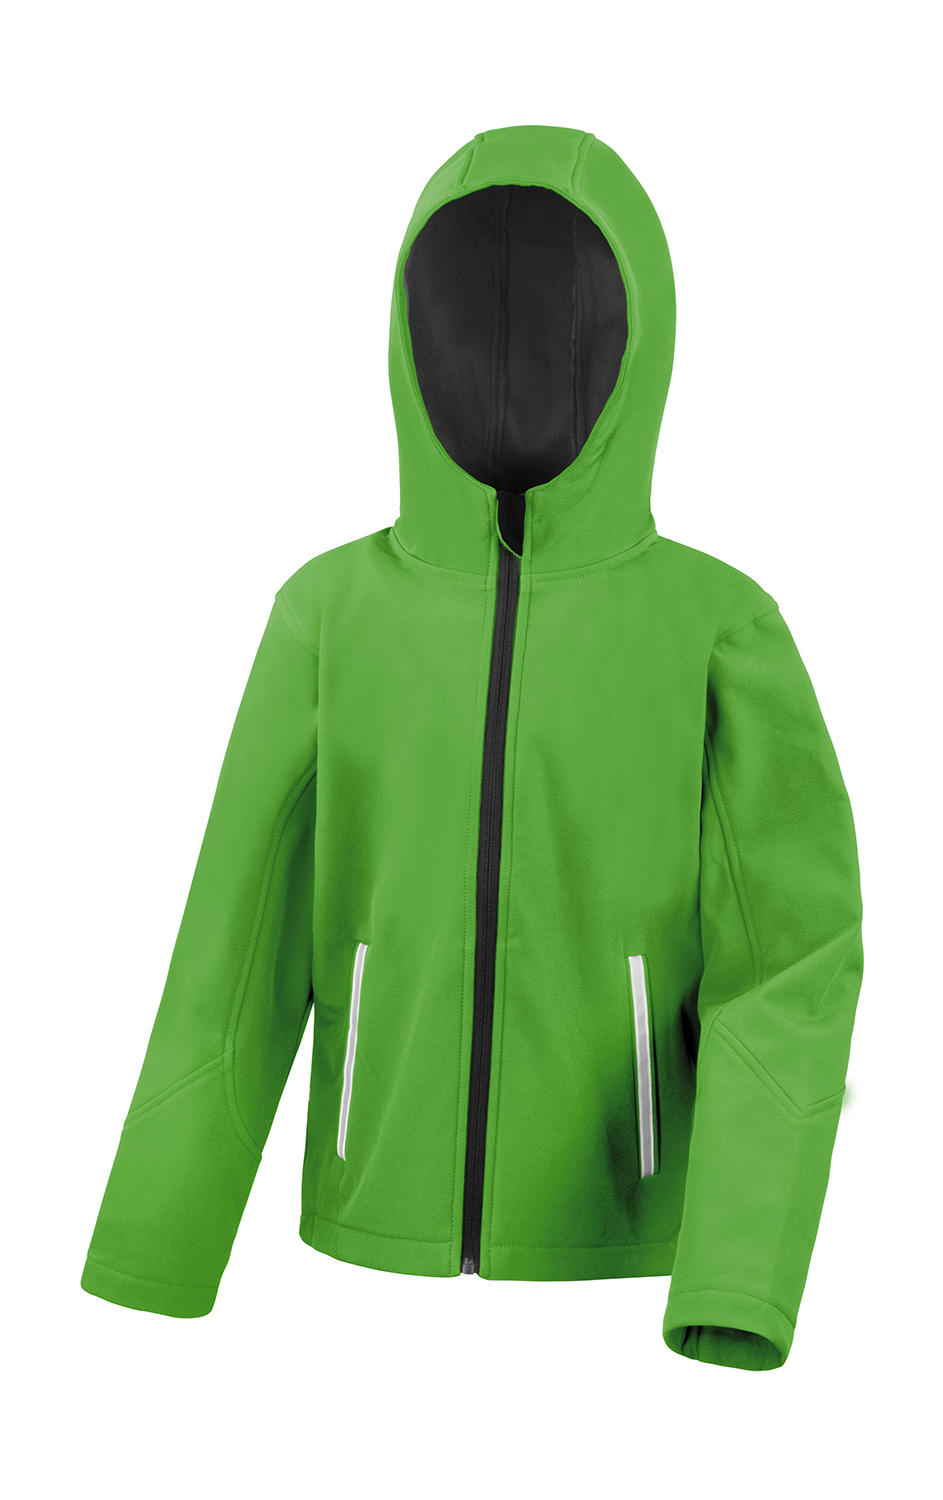  Kids TX Performance Hooded Softshell Jacket in Farbe Vivid Green/Black